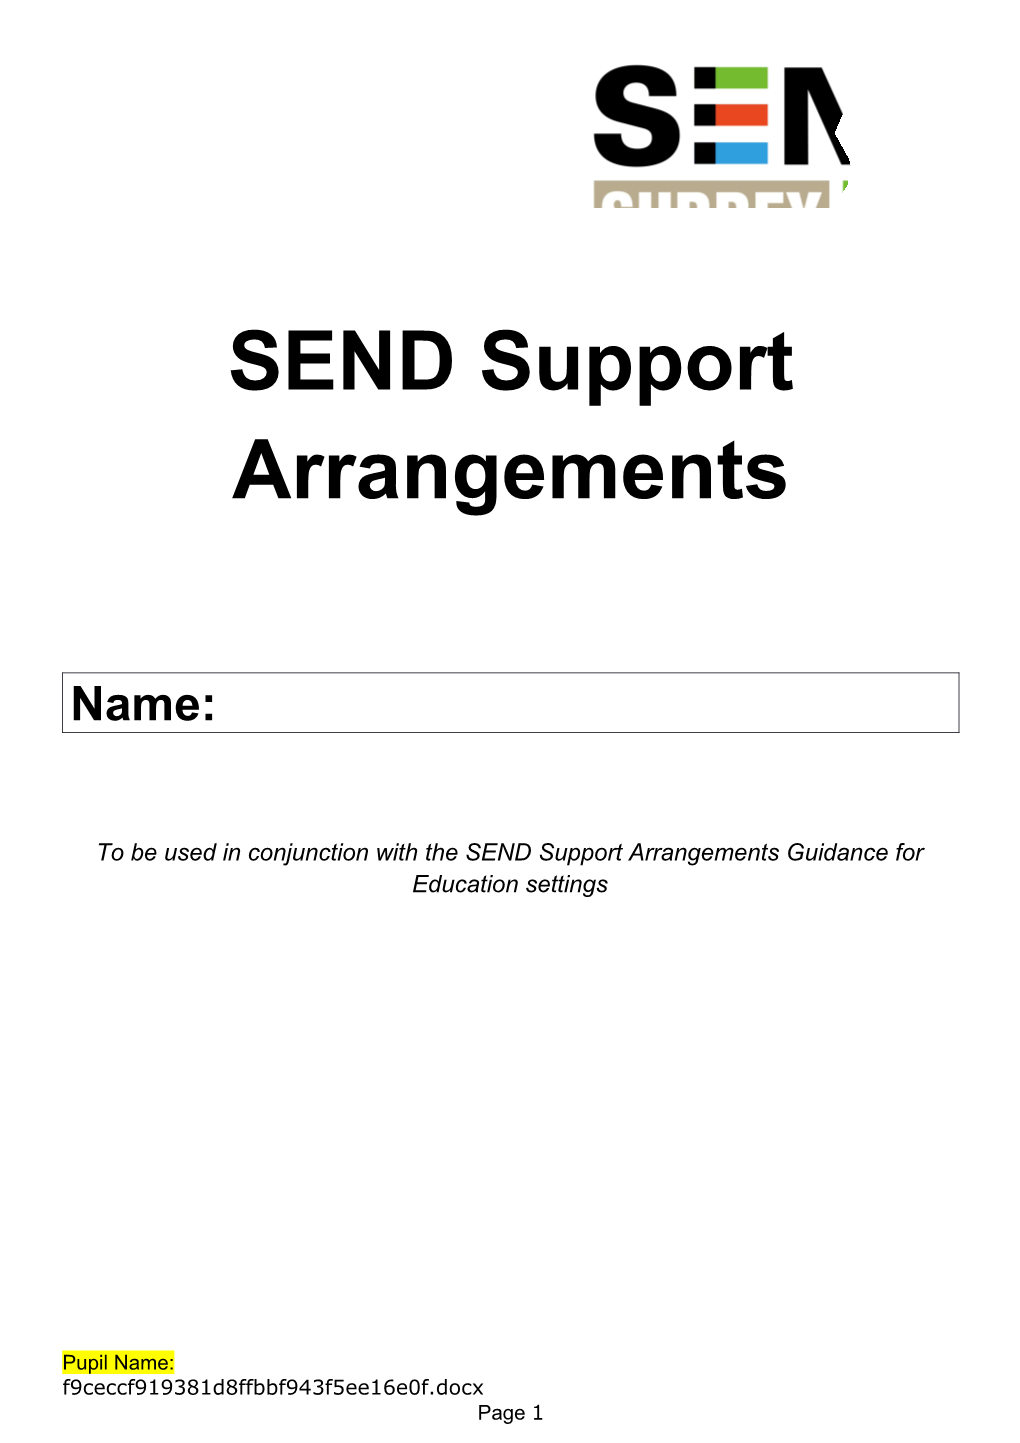 SEND Support Arrangements